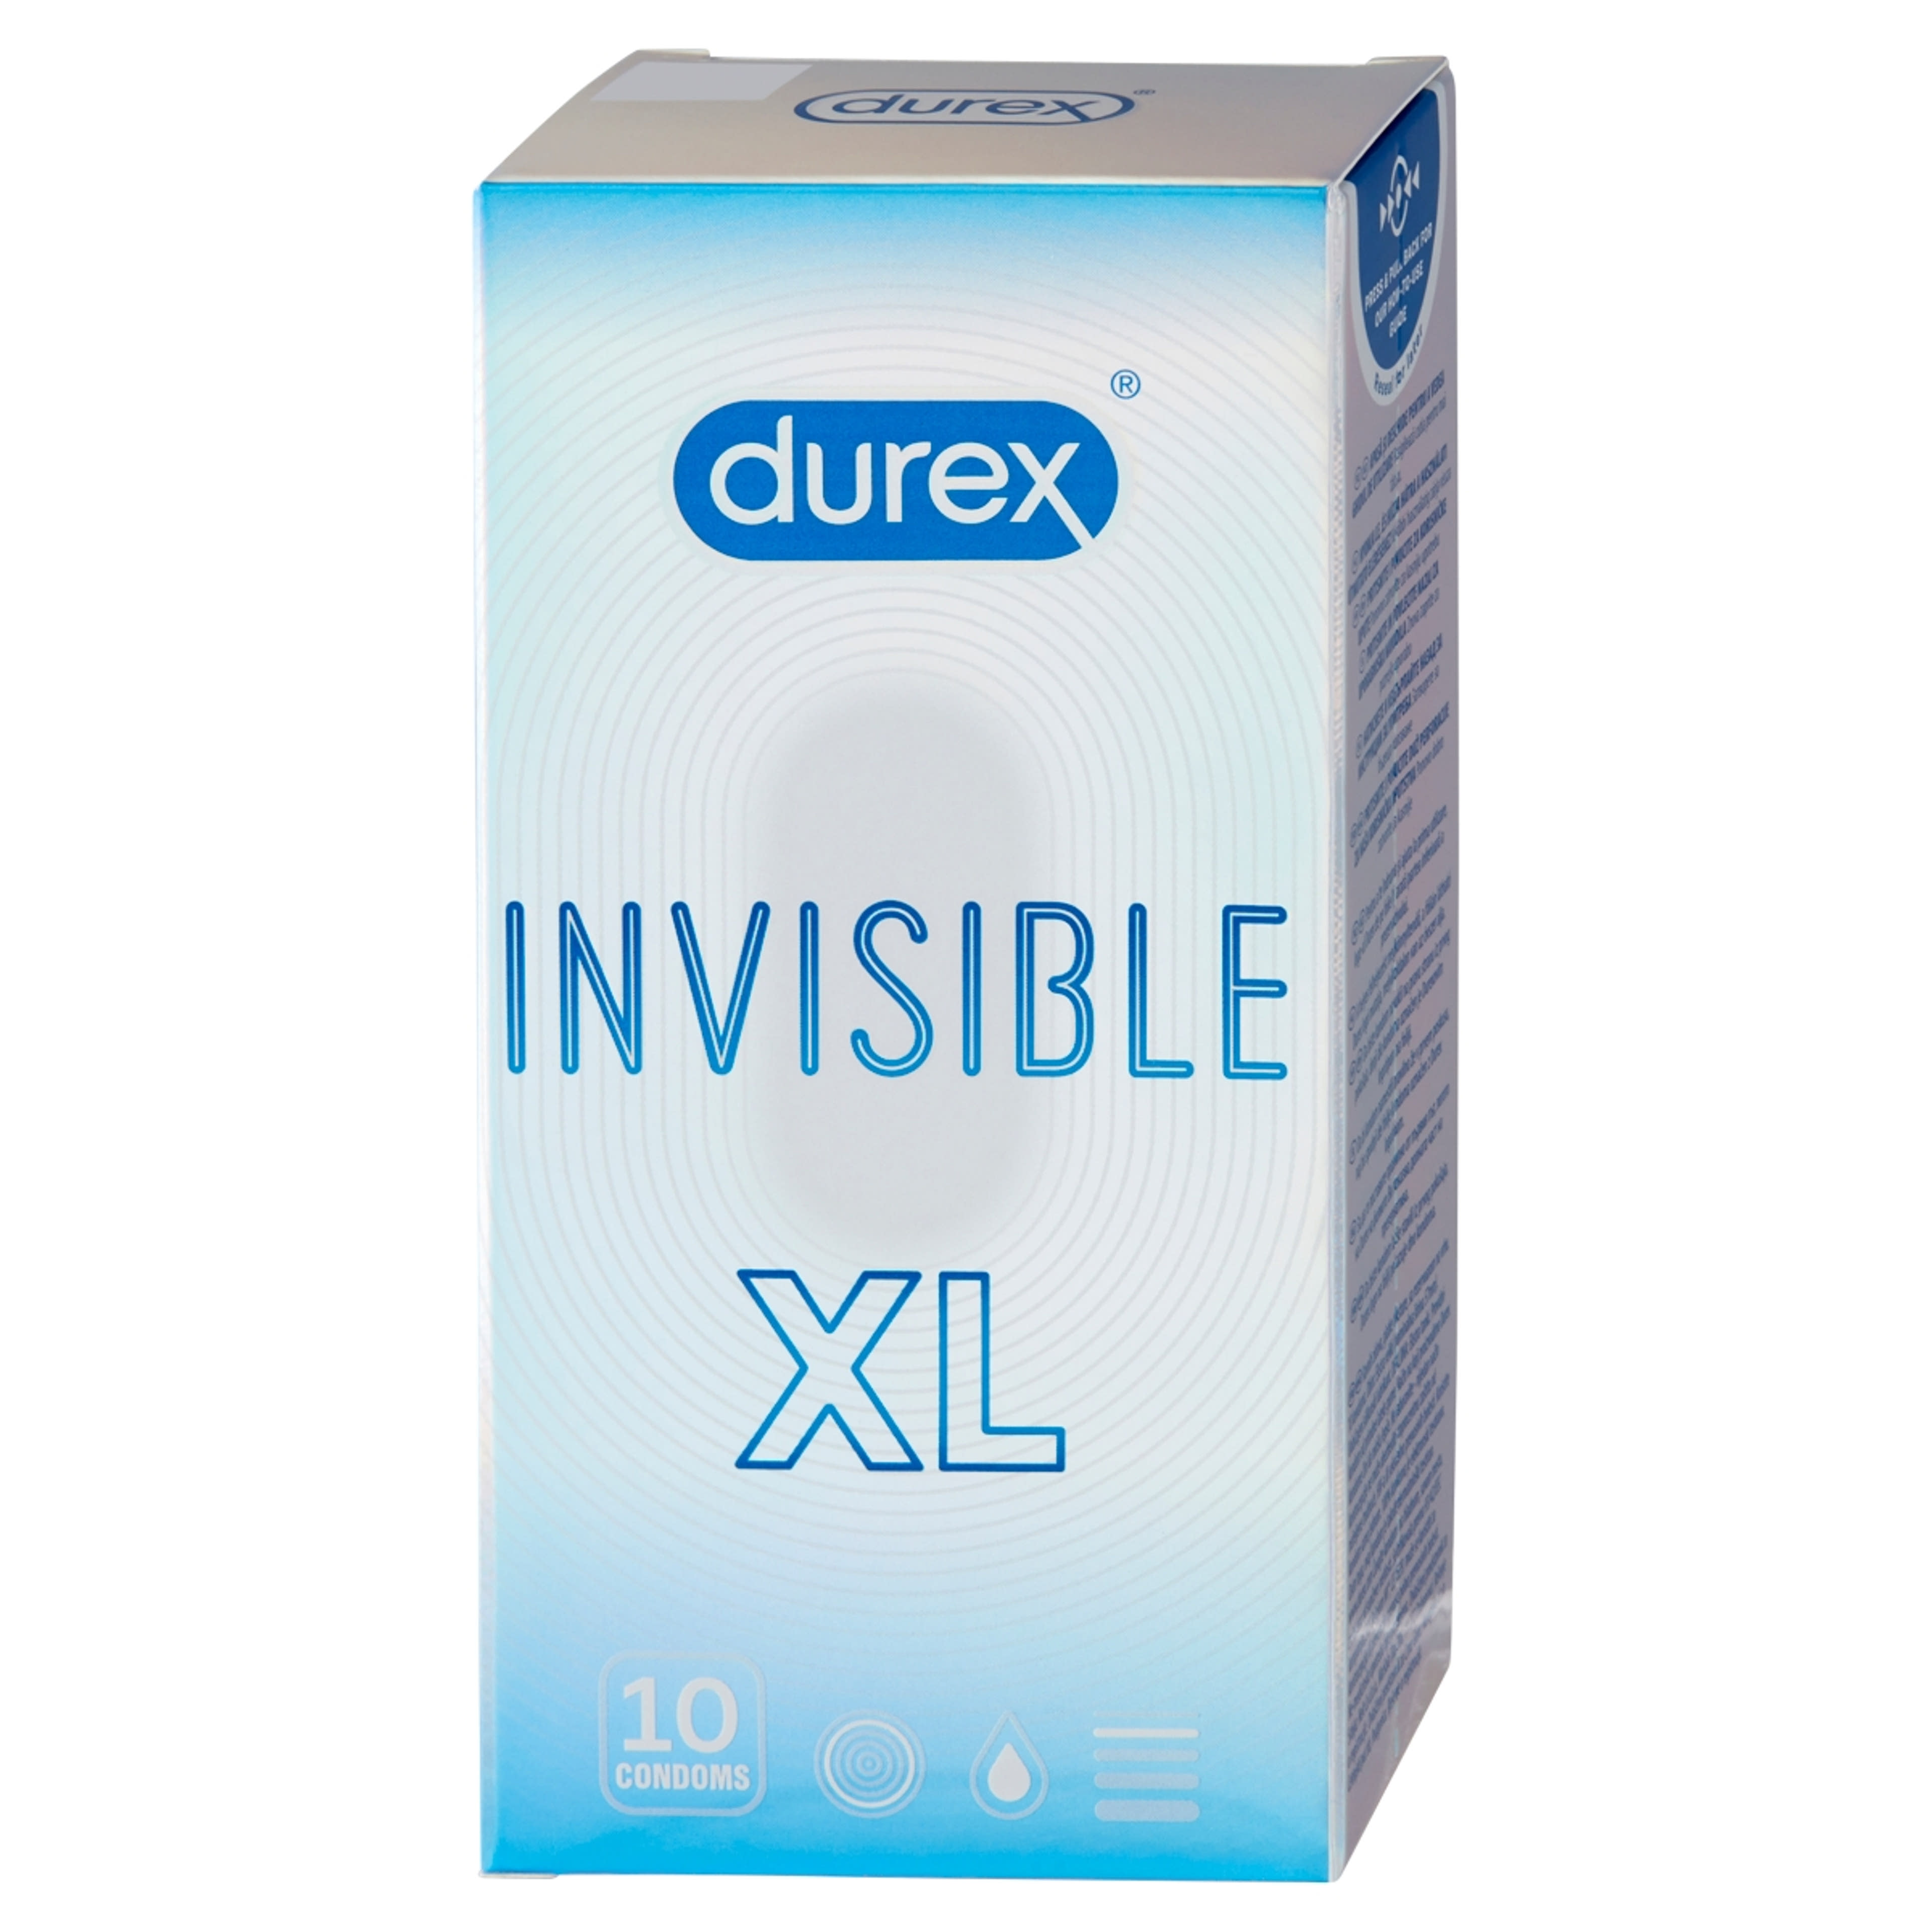 Durex óvszer invisible xl - 10 db-5